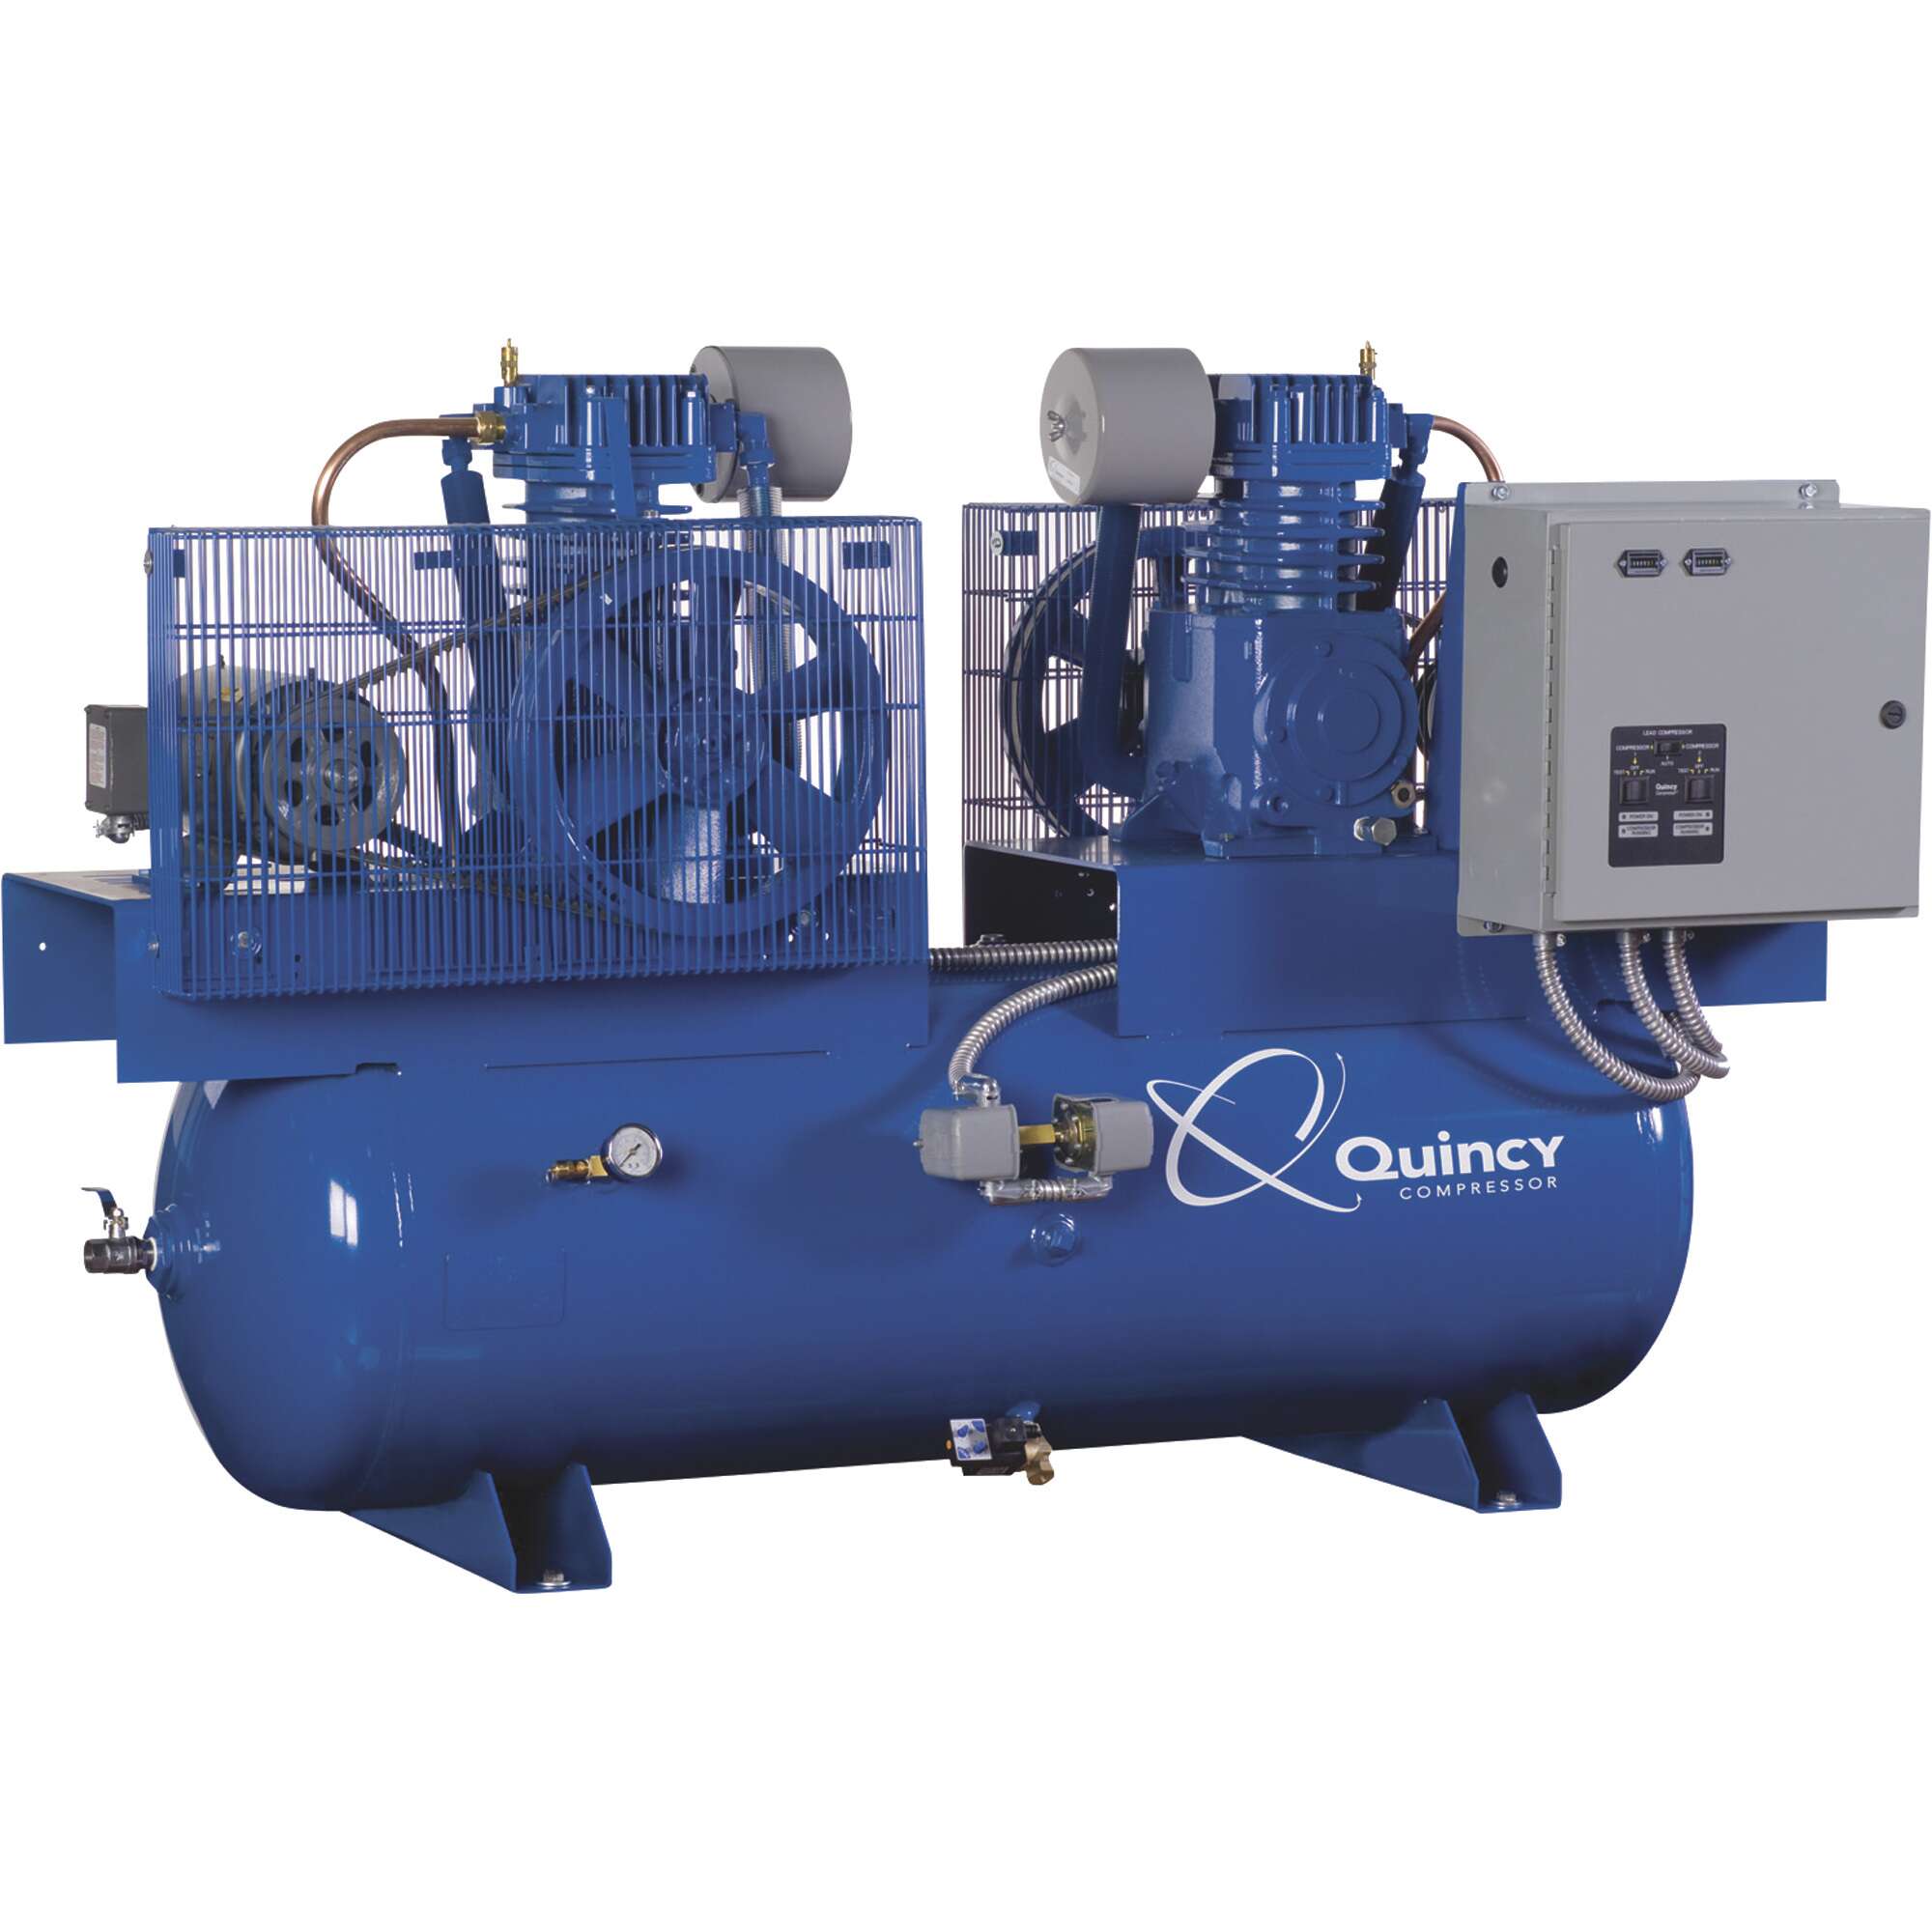 Quincy QT Splash Lubricated Duplex Air Compressor 7.5 HP 460 Volt 3 Phase 120 Gallon Horizontal